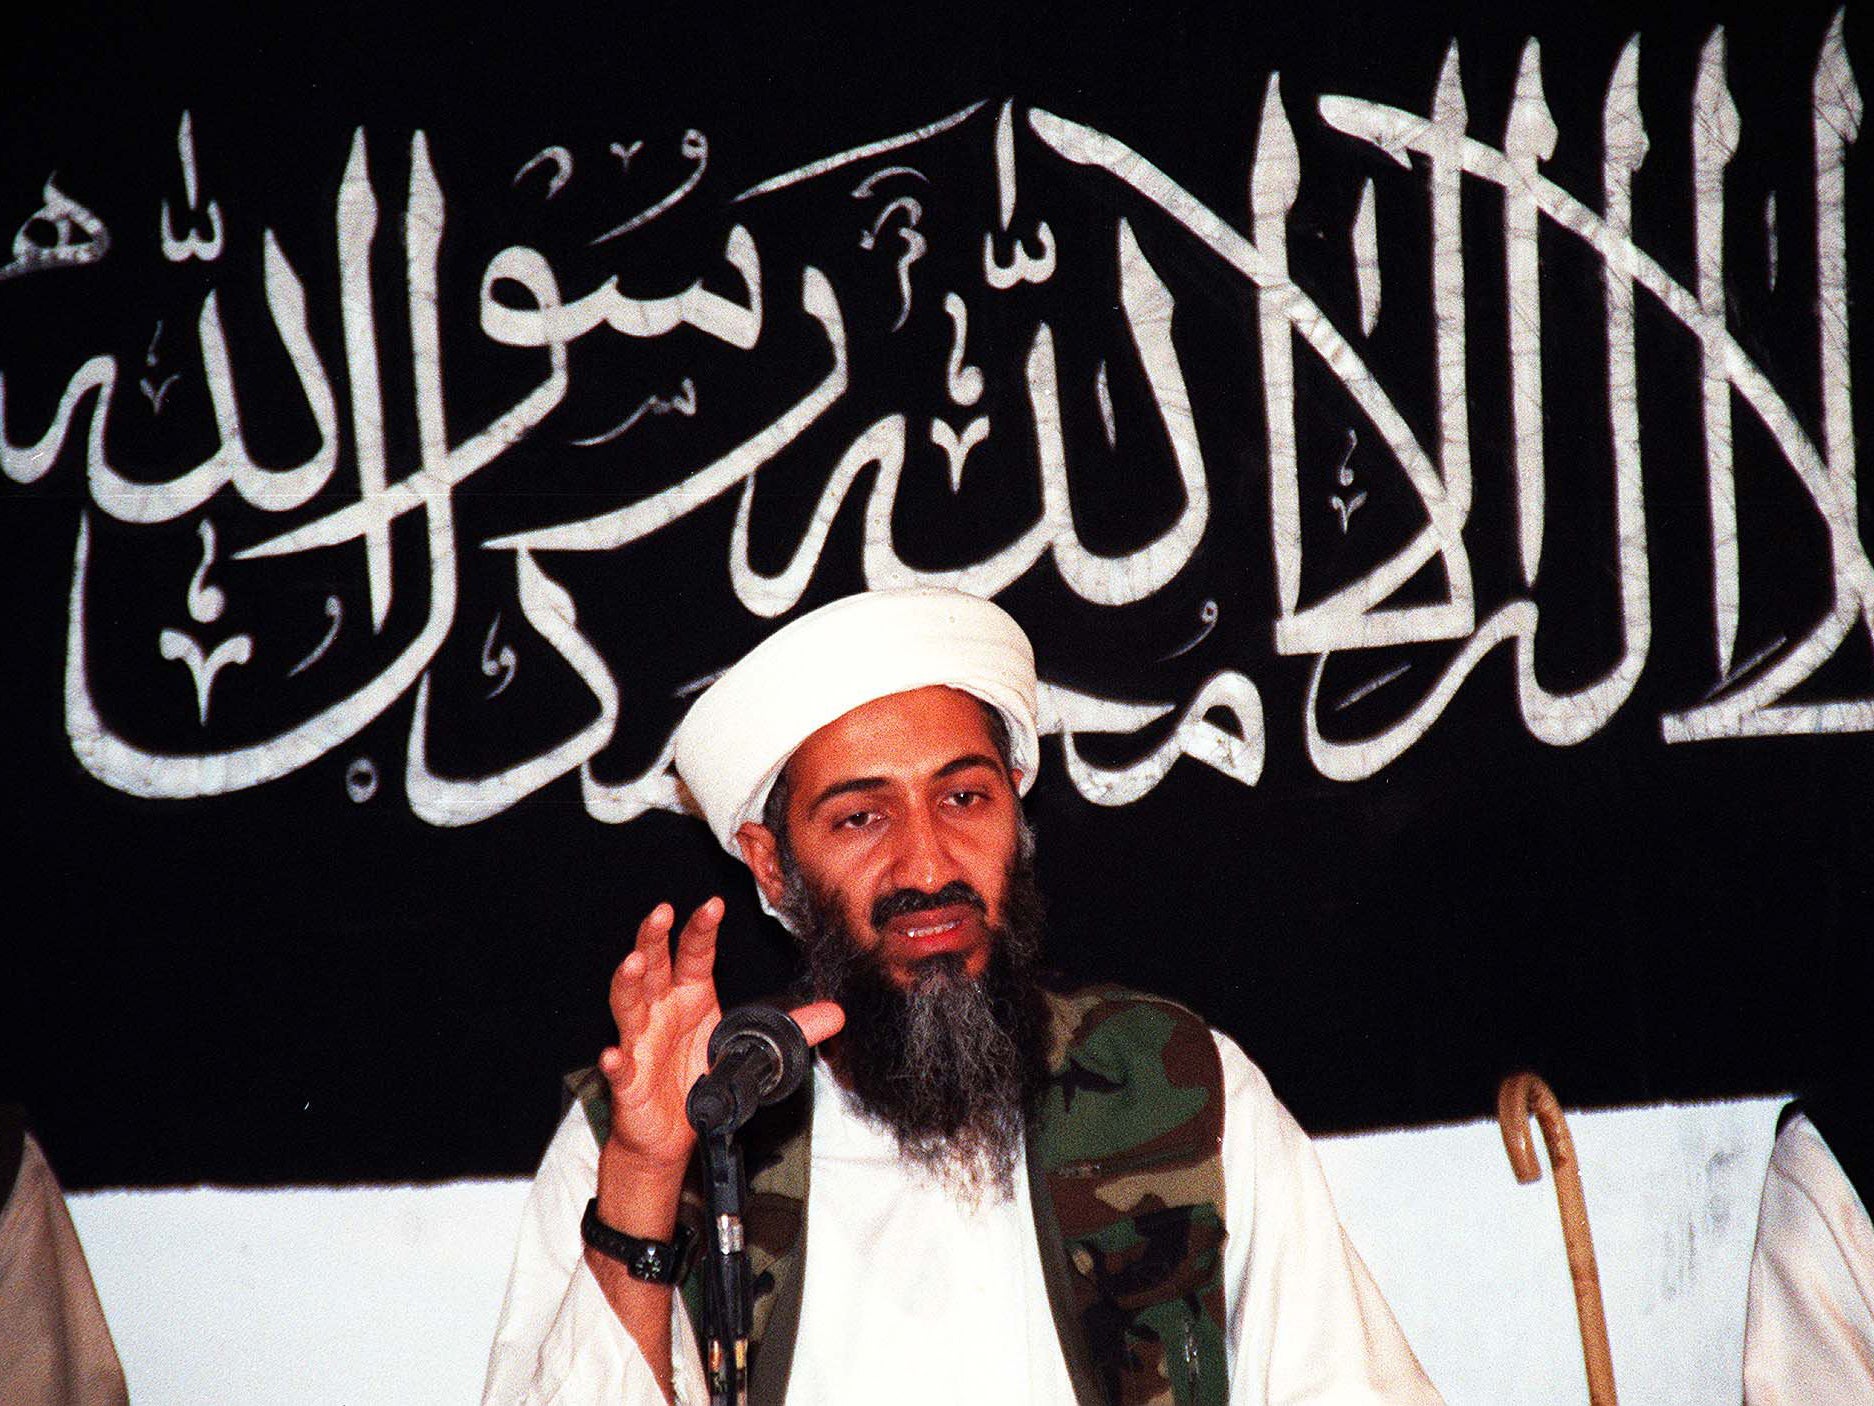 Mr Obama authorized the operation that killed Osama Bin Laden